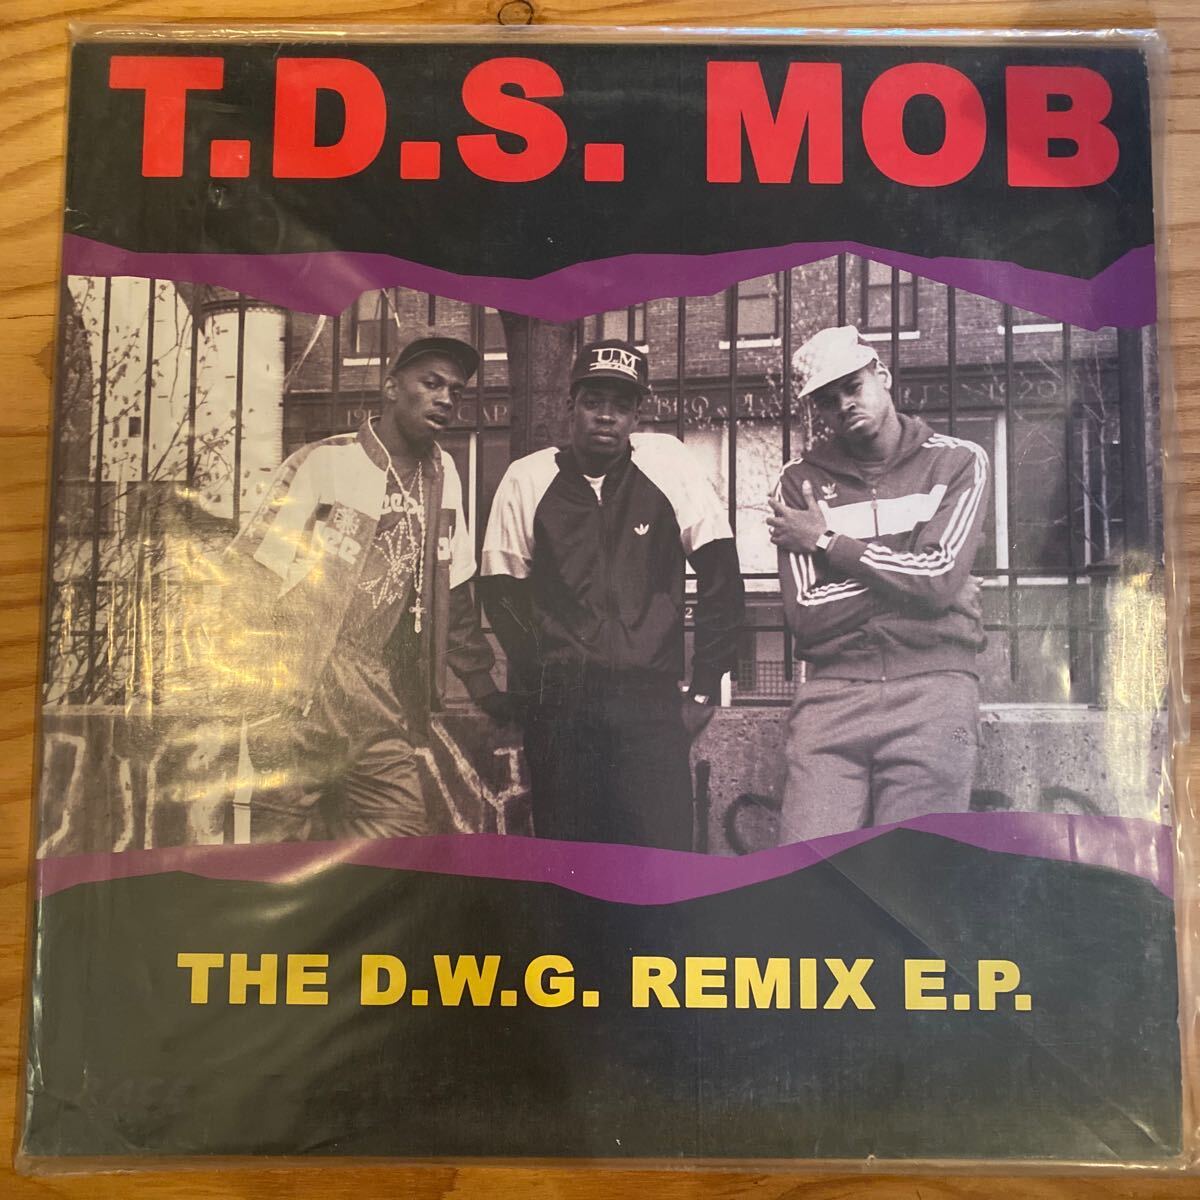 試聴OK 希少REMIX集!! T.D.S.MOB The D.W.G. Remix E.P. Diggers With Gratitude muro koco kiyo_画像1